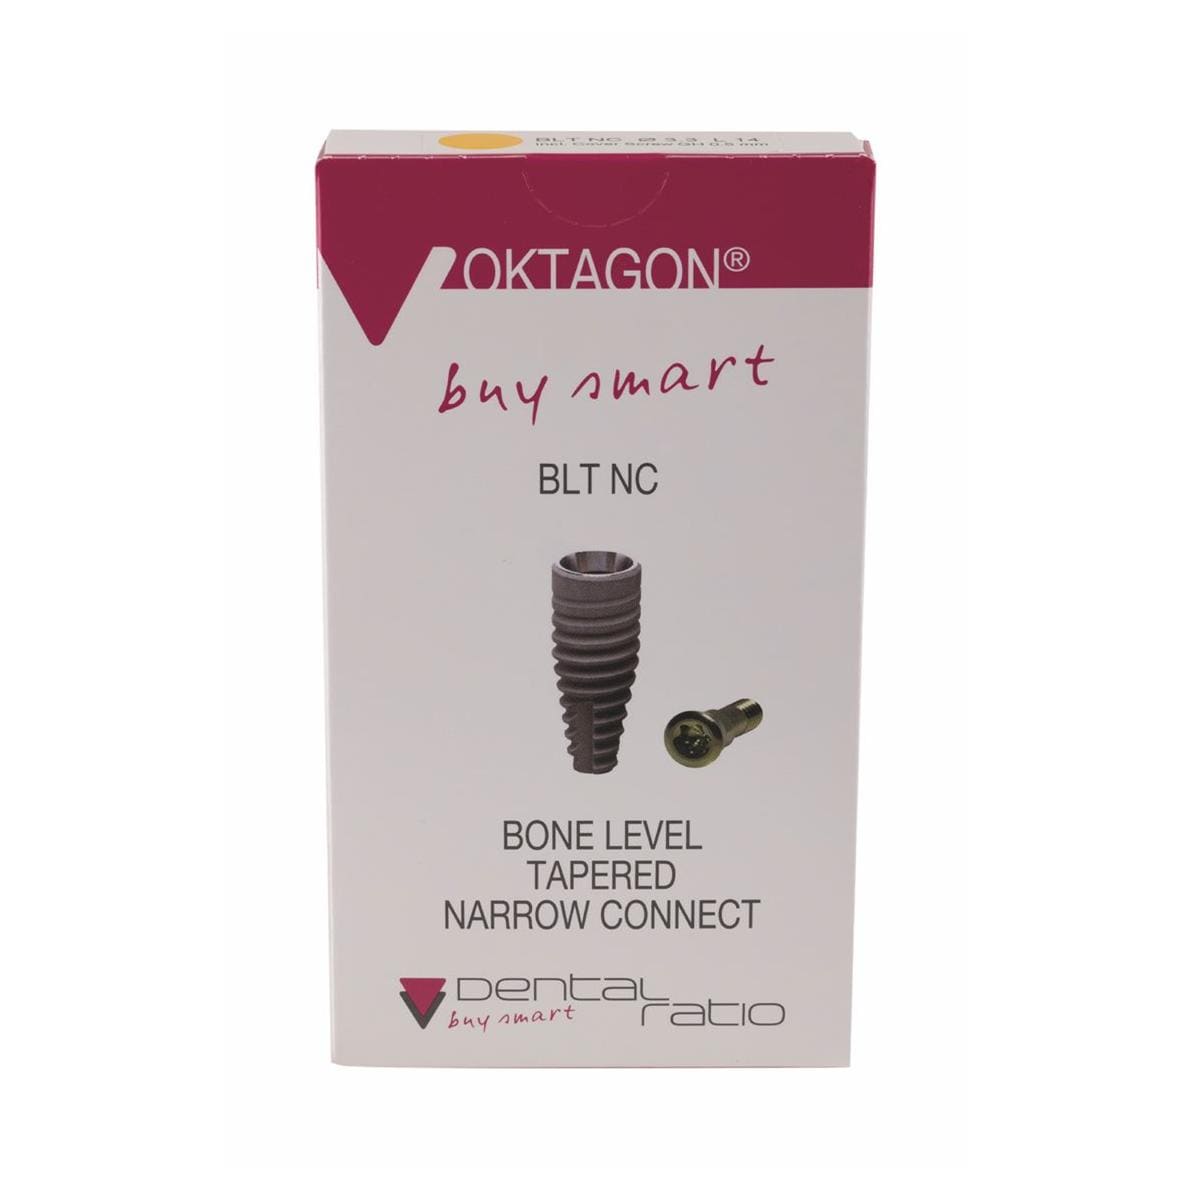 OKTAGON® Bone Level Tapered Narrow Connect Implant Diameter 3.3mm Length 14.0mm